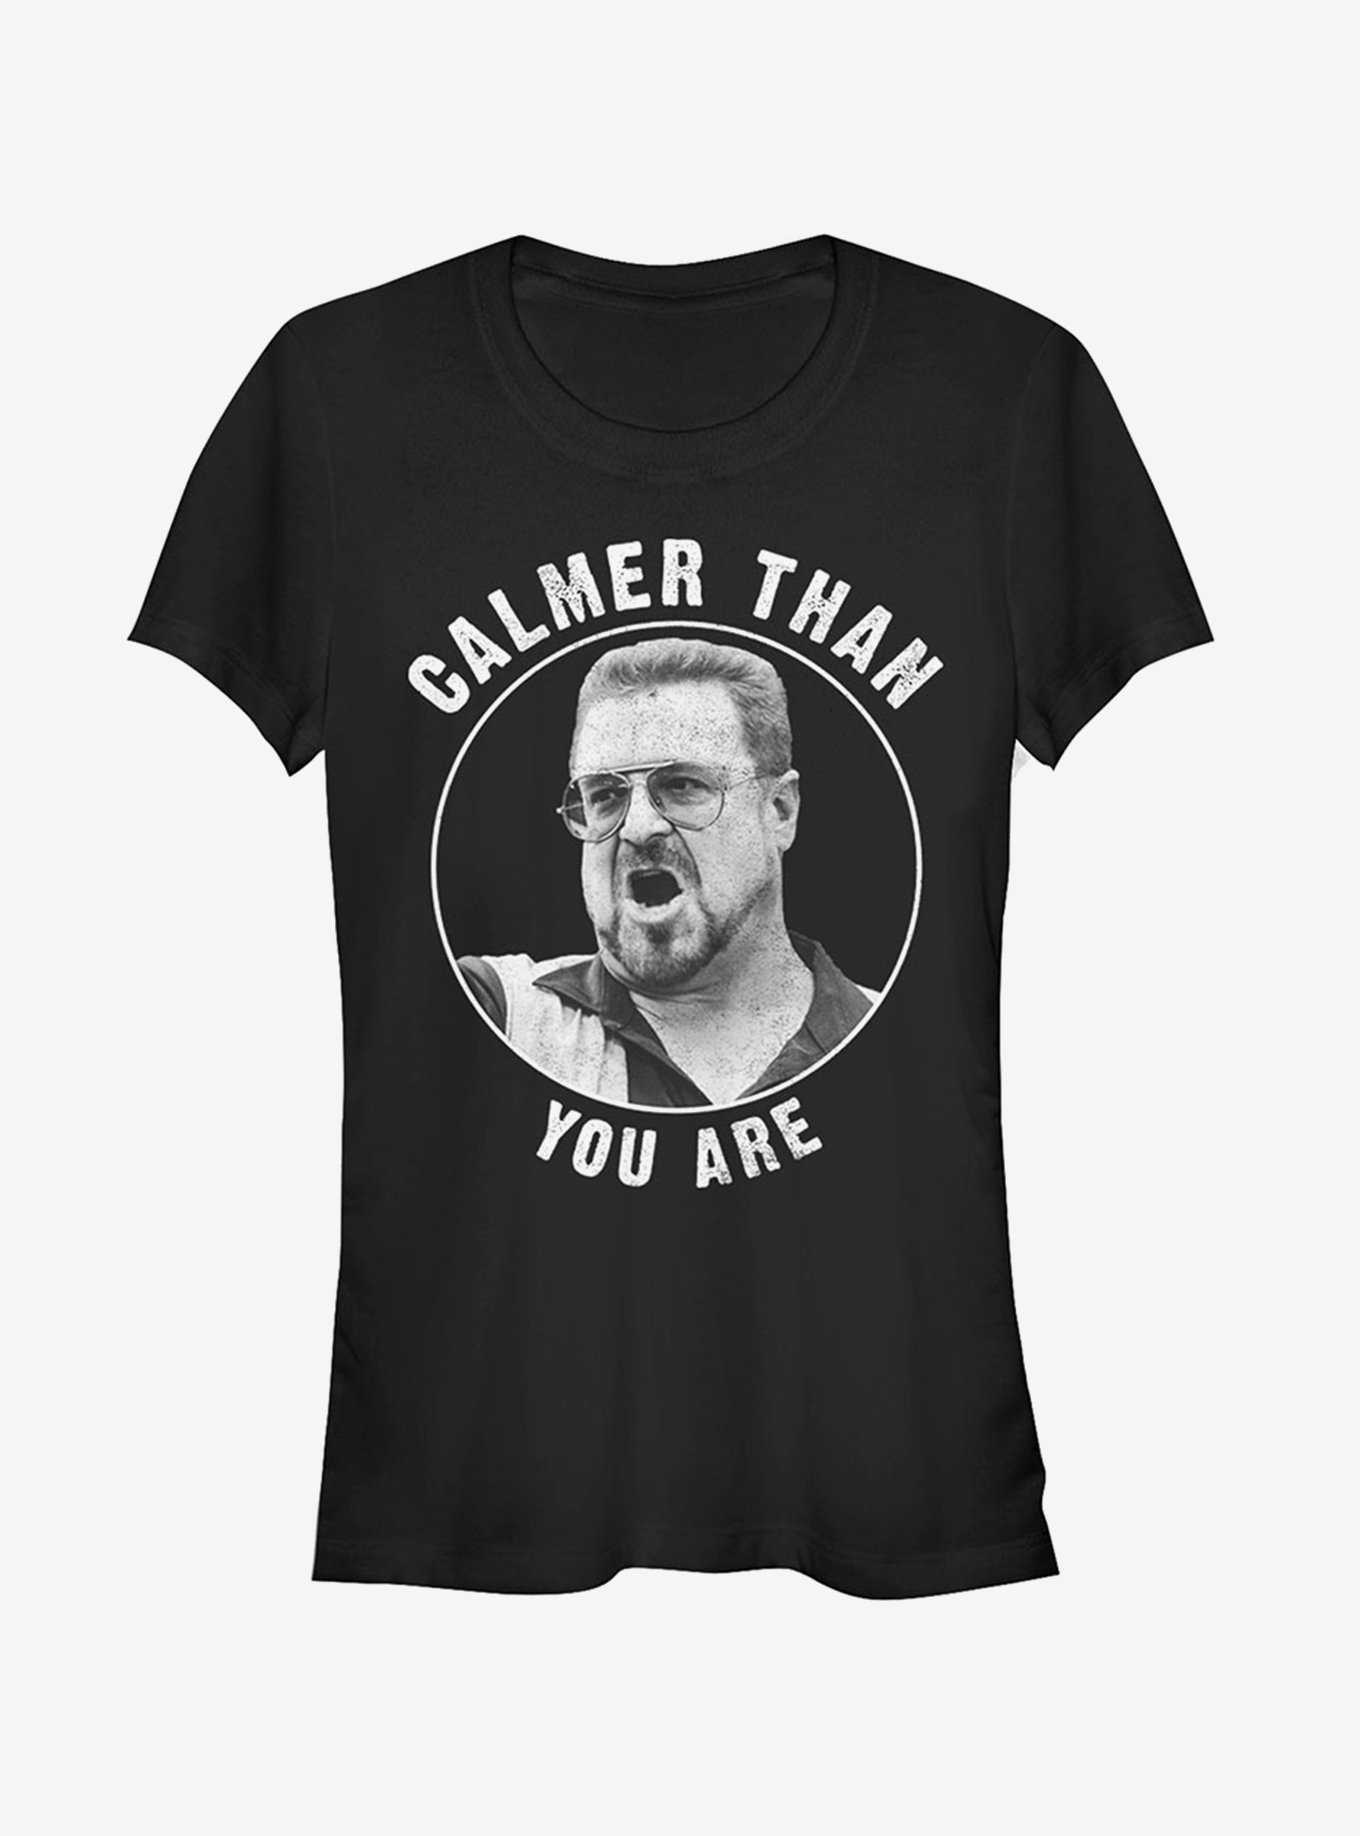 Walter Calmer Than You Girls T-Shirt, , hi-res